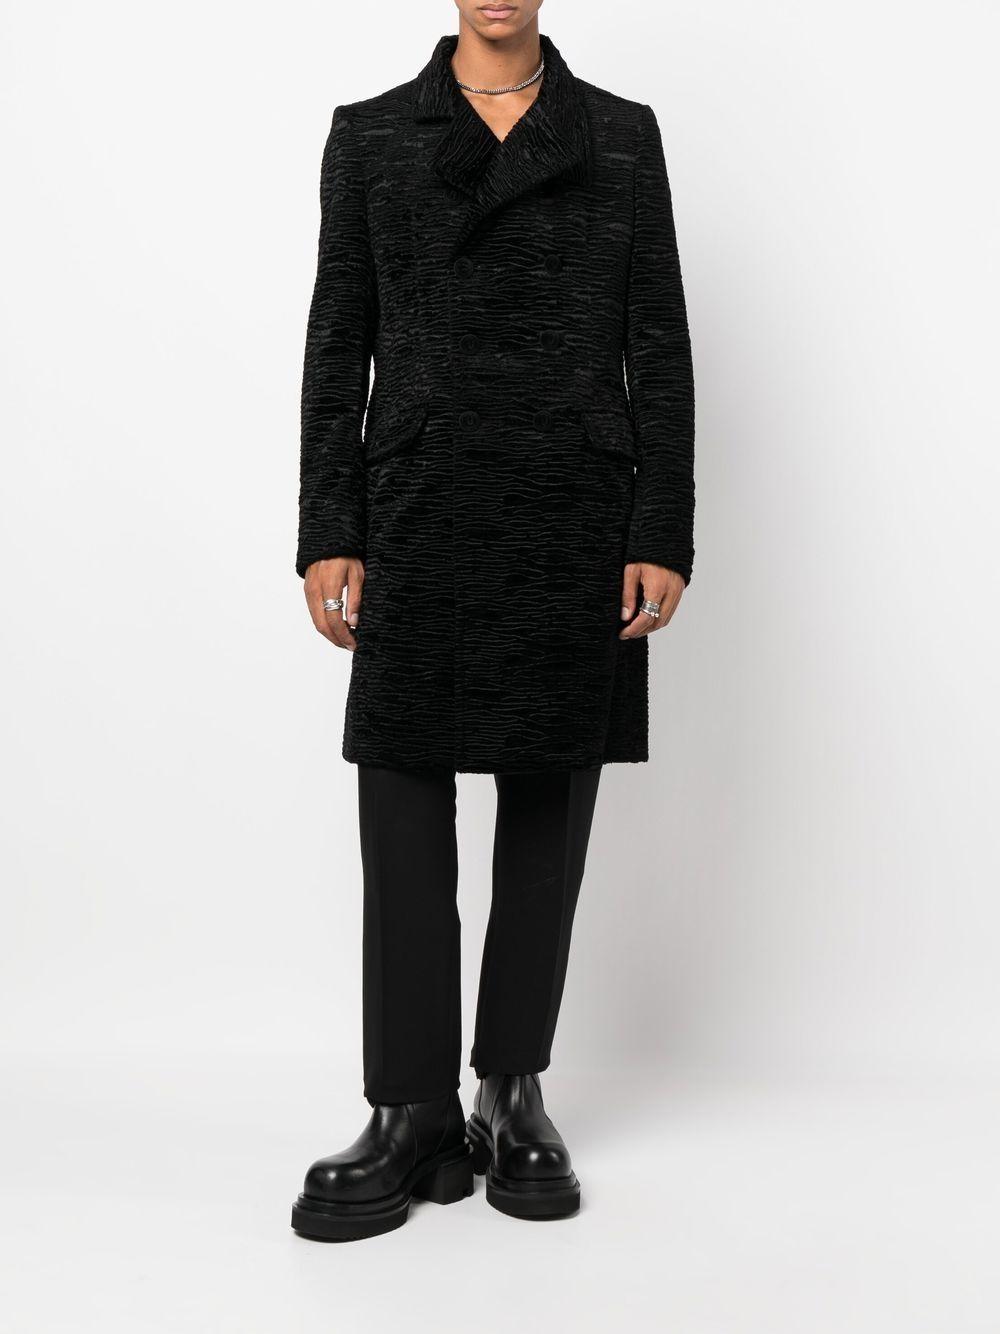 Save 50% Mens Coats Balmain Coats Balmain Synthetic Coats Black for Men 